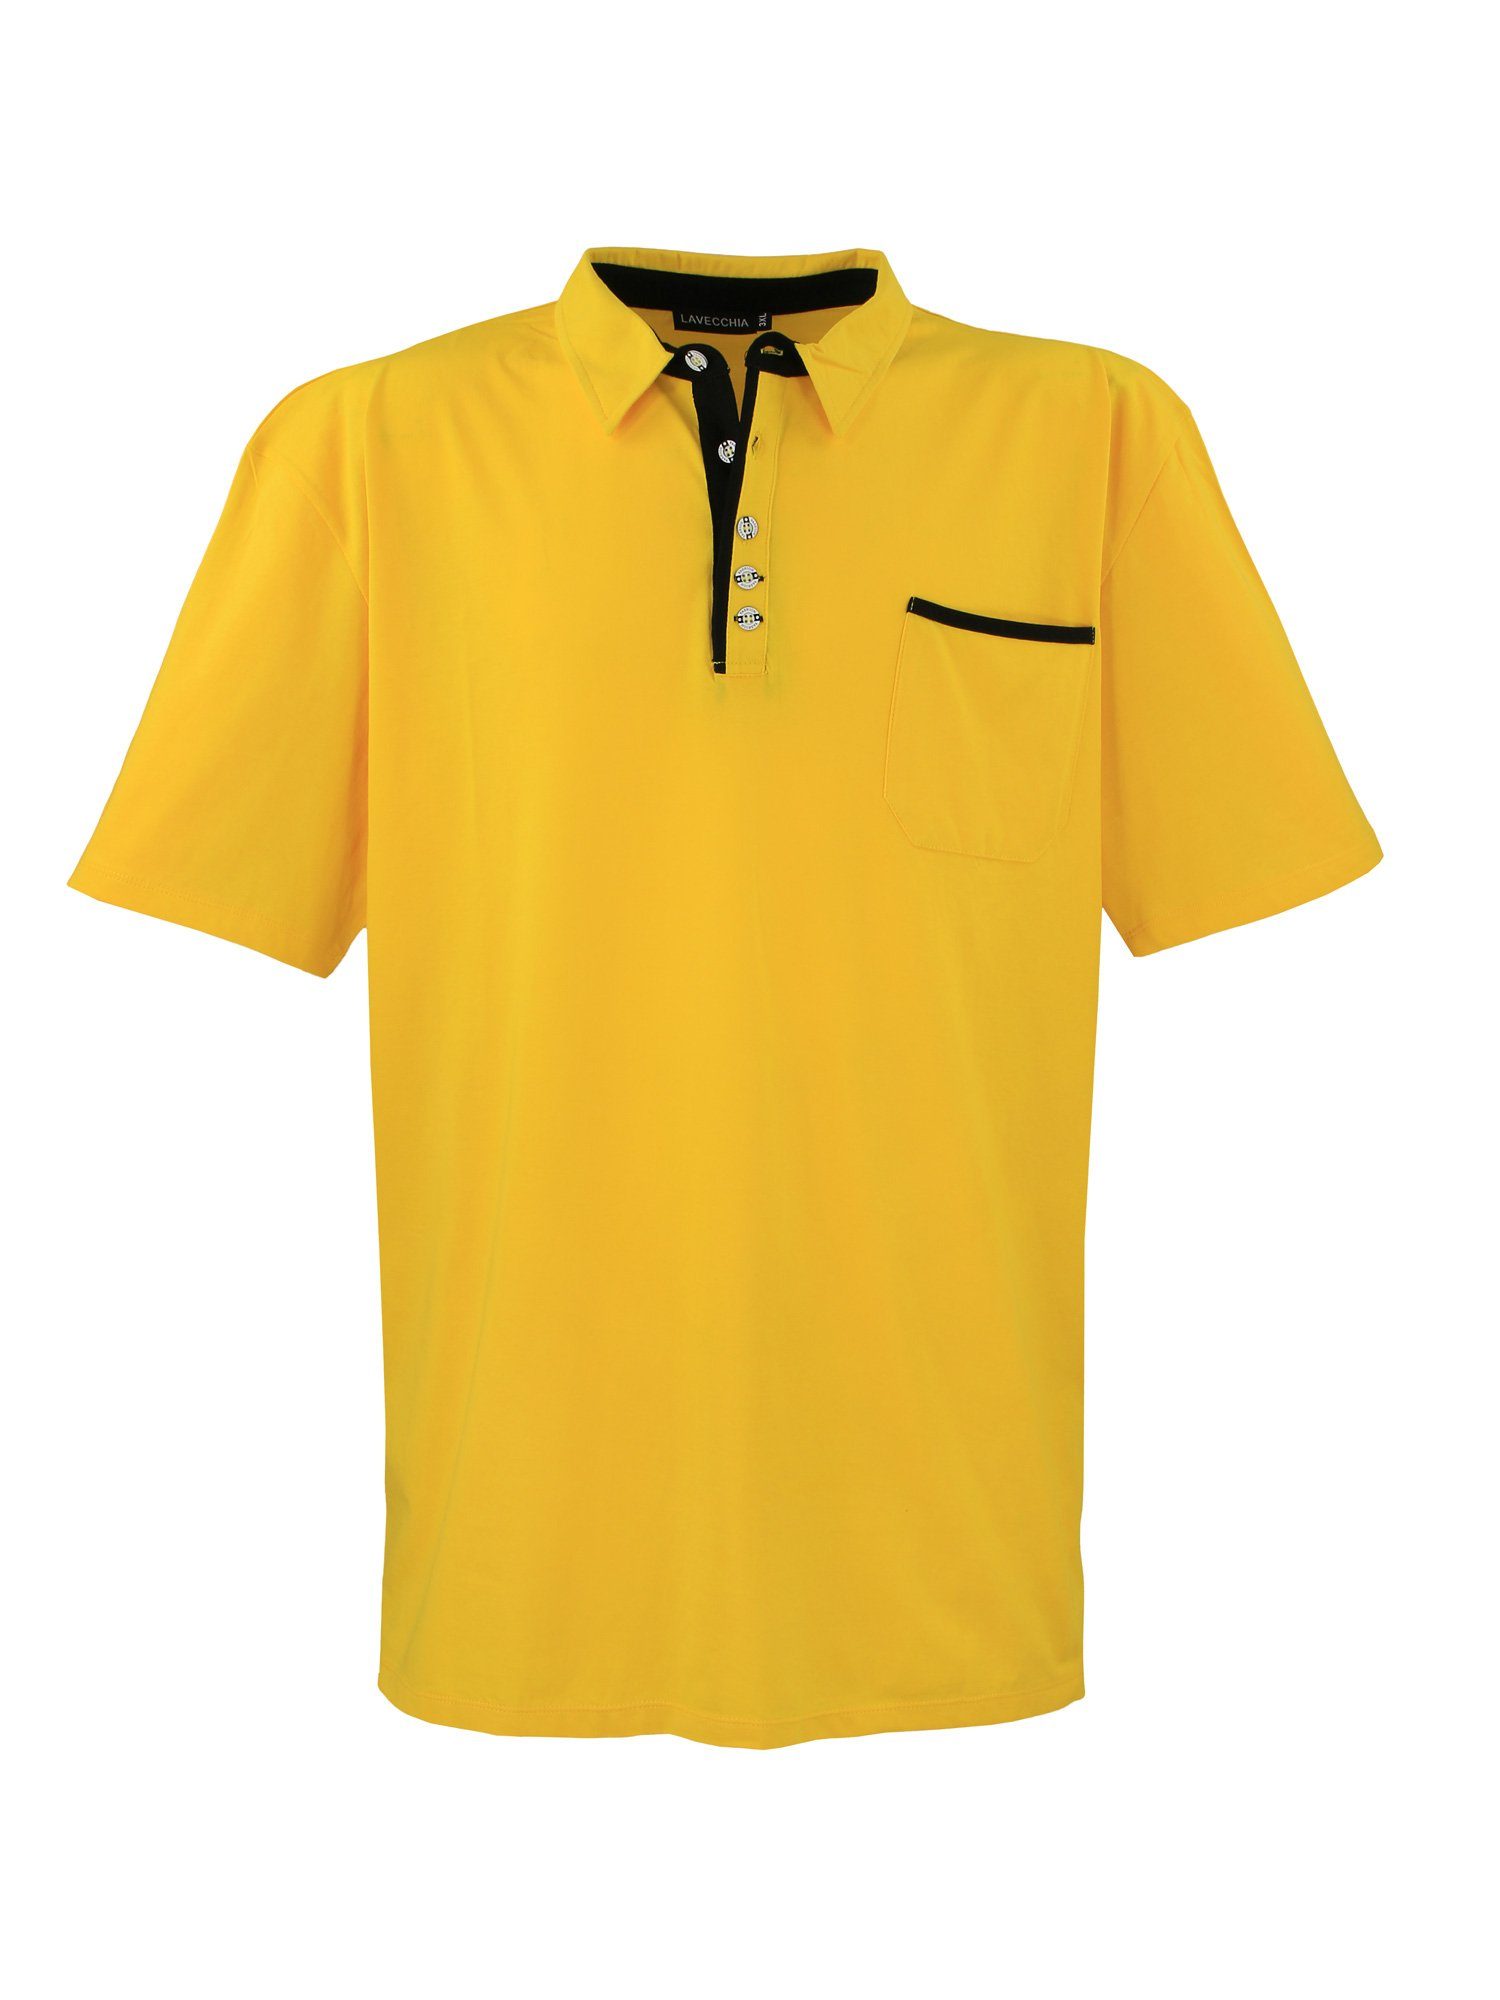 Lavecchia Poloshirt Übergrößen Polo LV-1701 Shirt Herren gelb Herren Polo Shirt